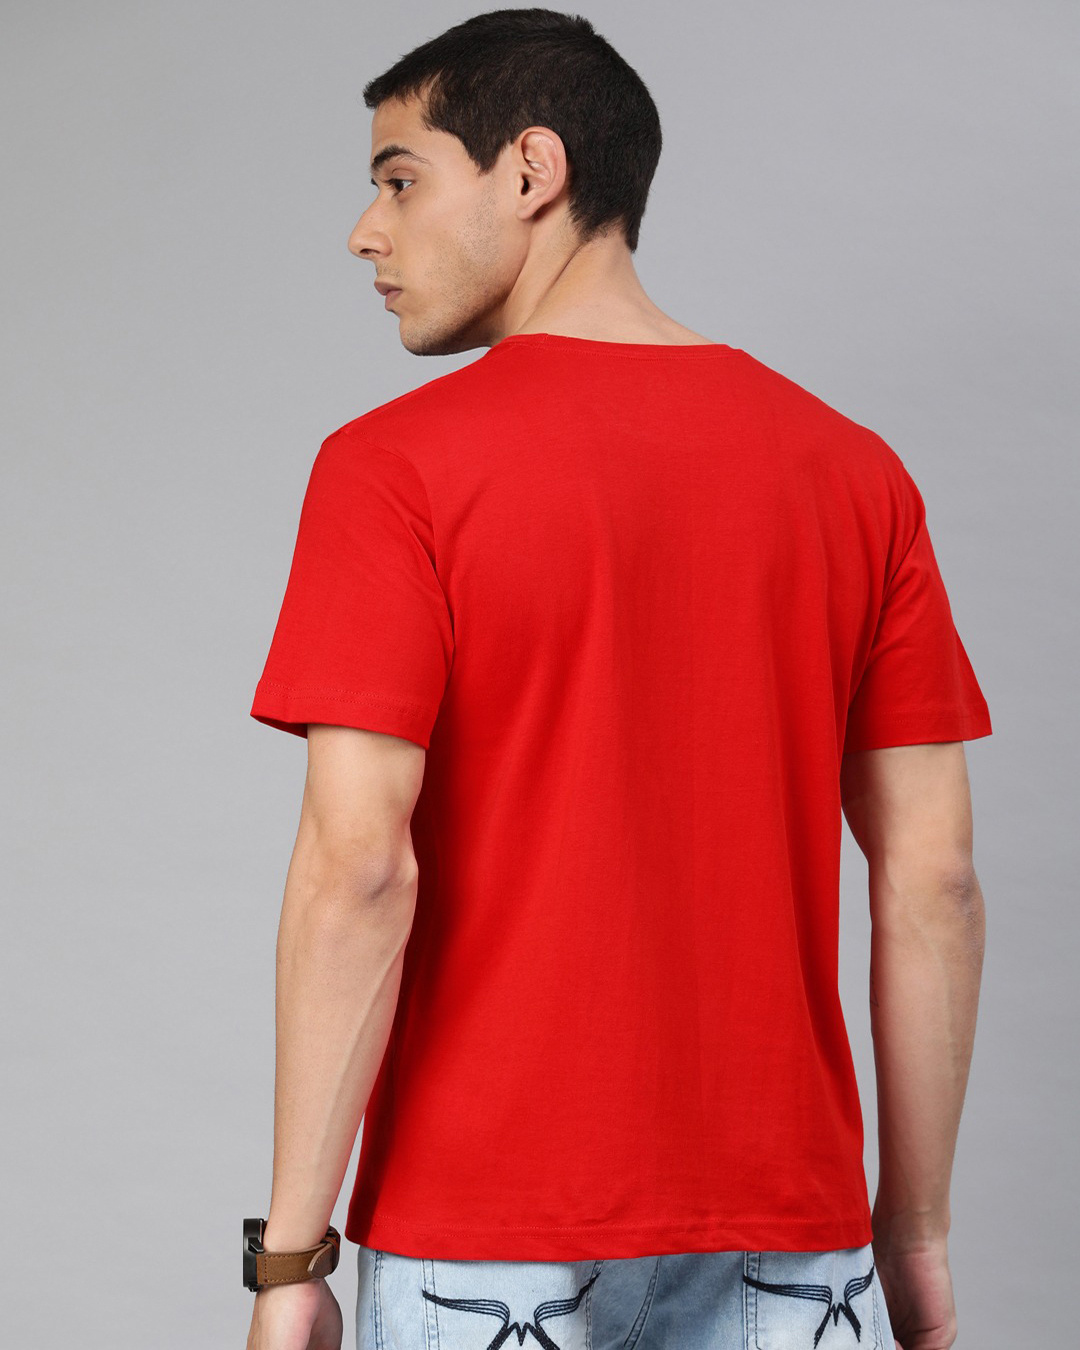 Shop Toh Kaise Hai Aap Log Half Sleeve T Shirt For Men-Back